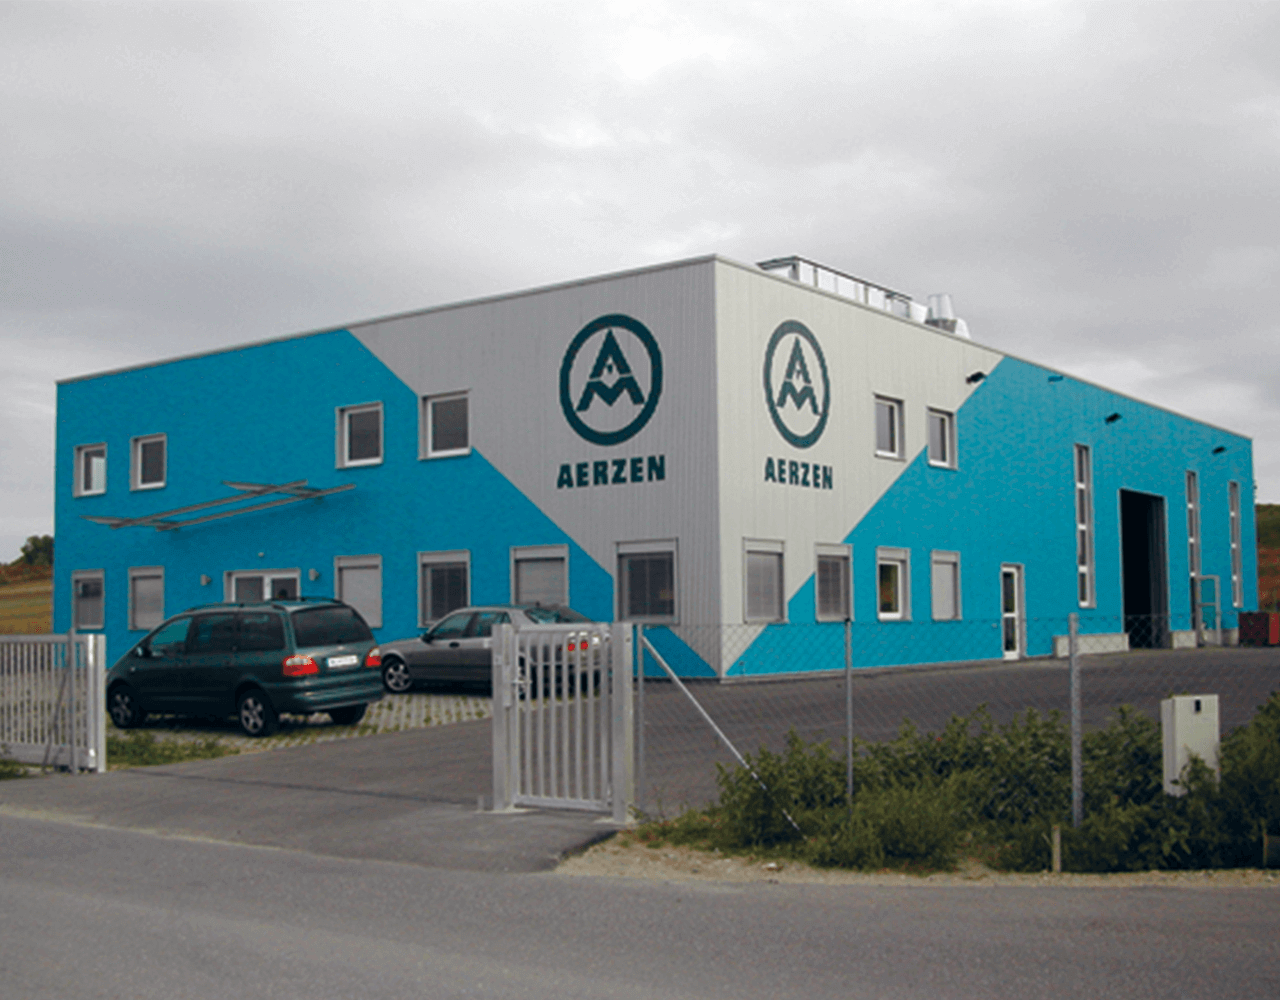 Imaginea clădirii filialei Aerzen Austria Handelsgesellschaft mbH.